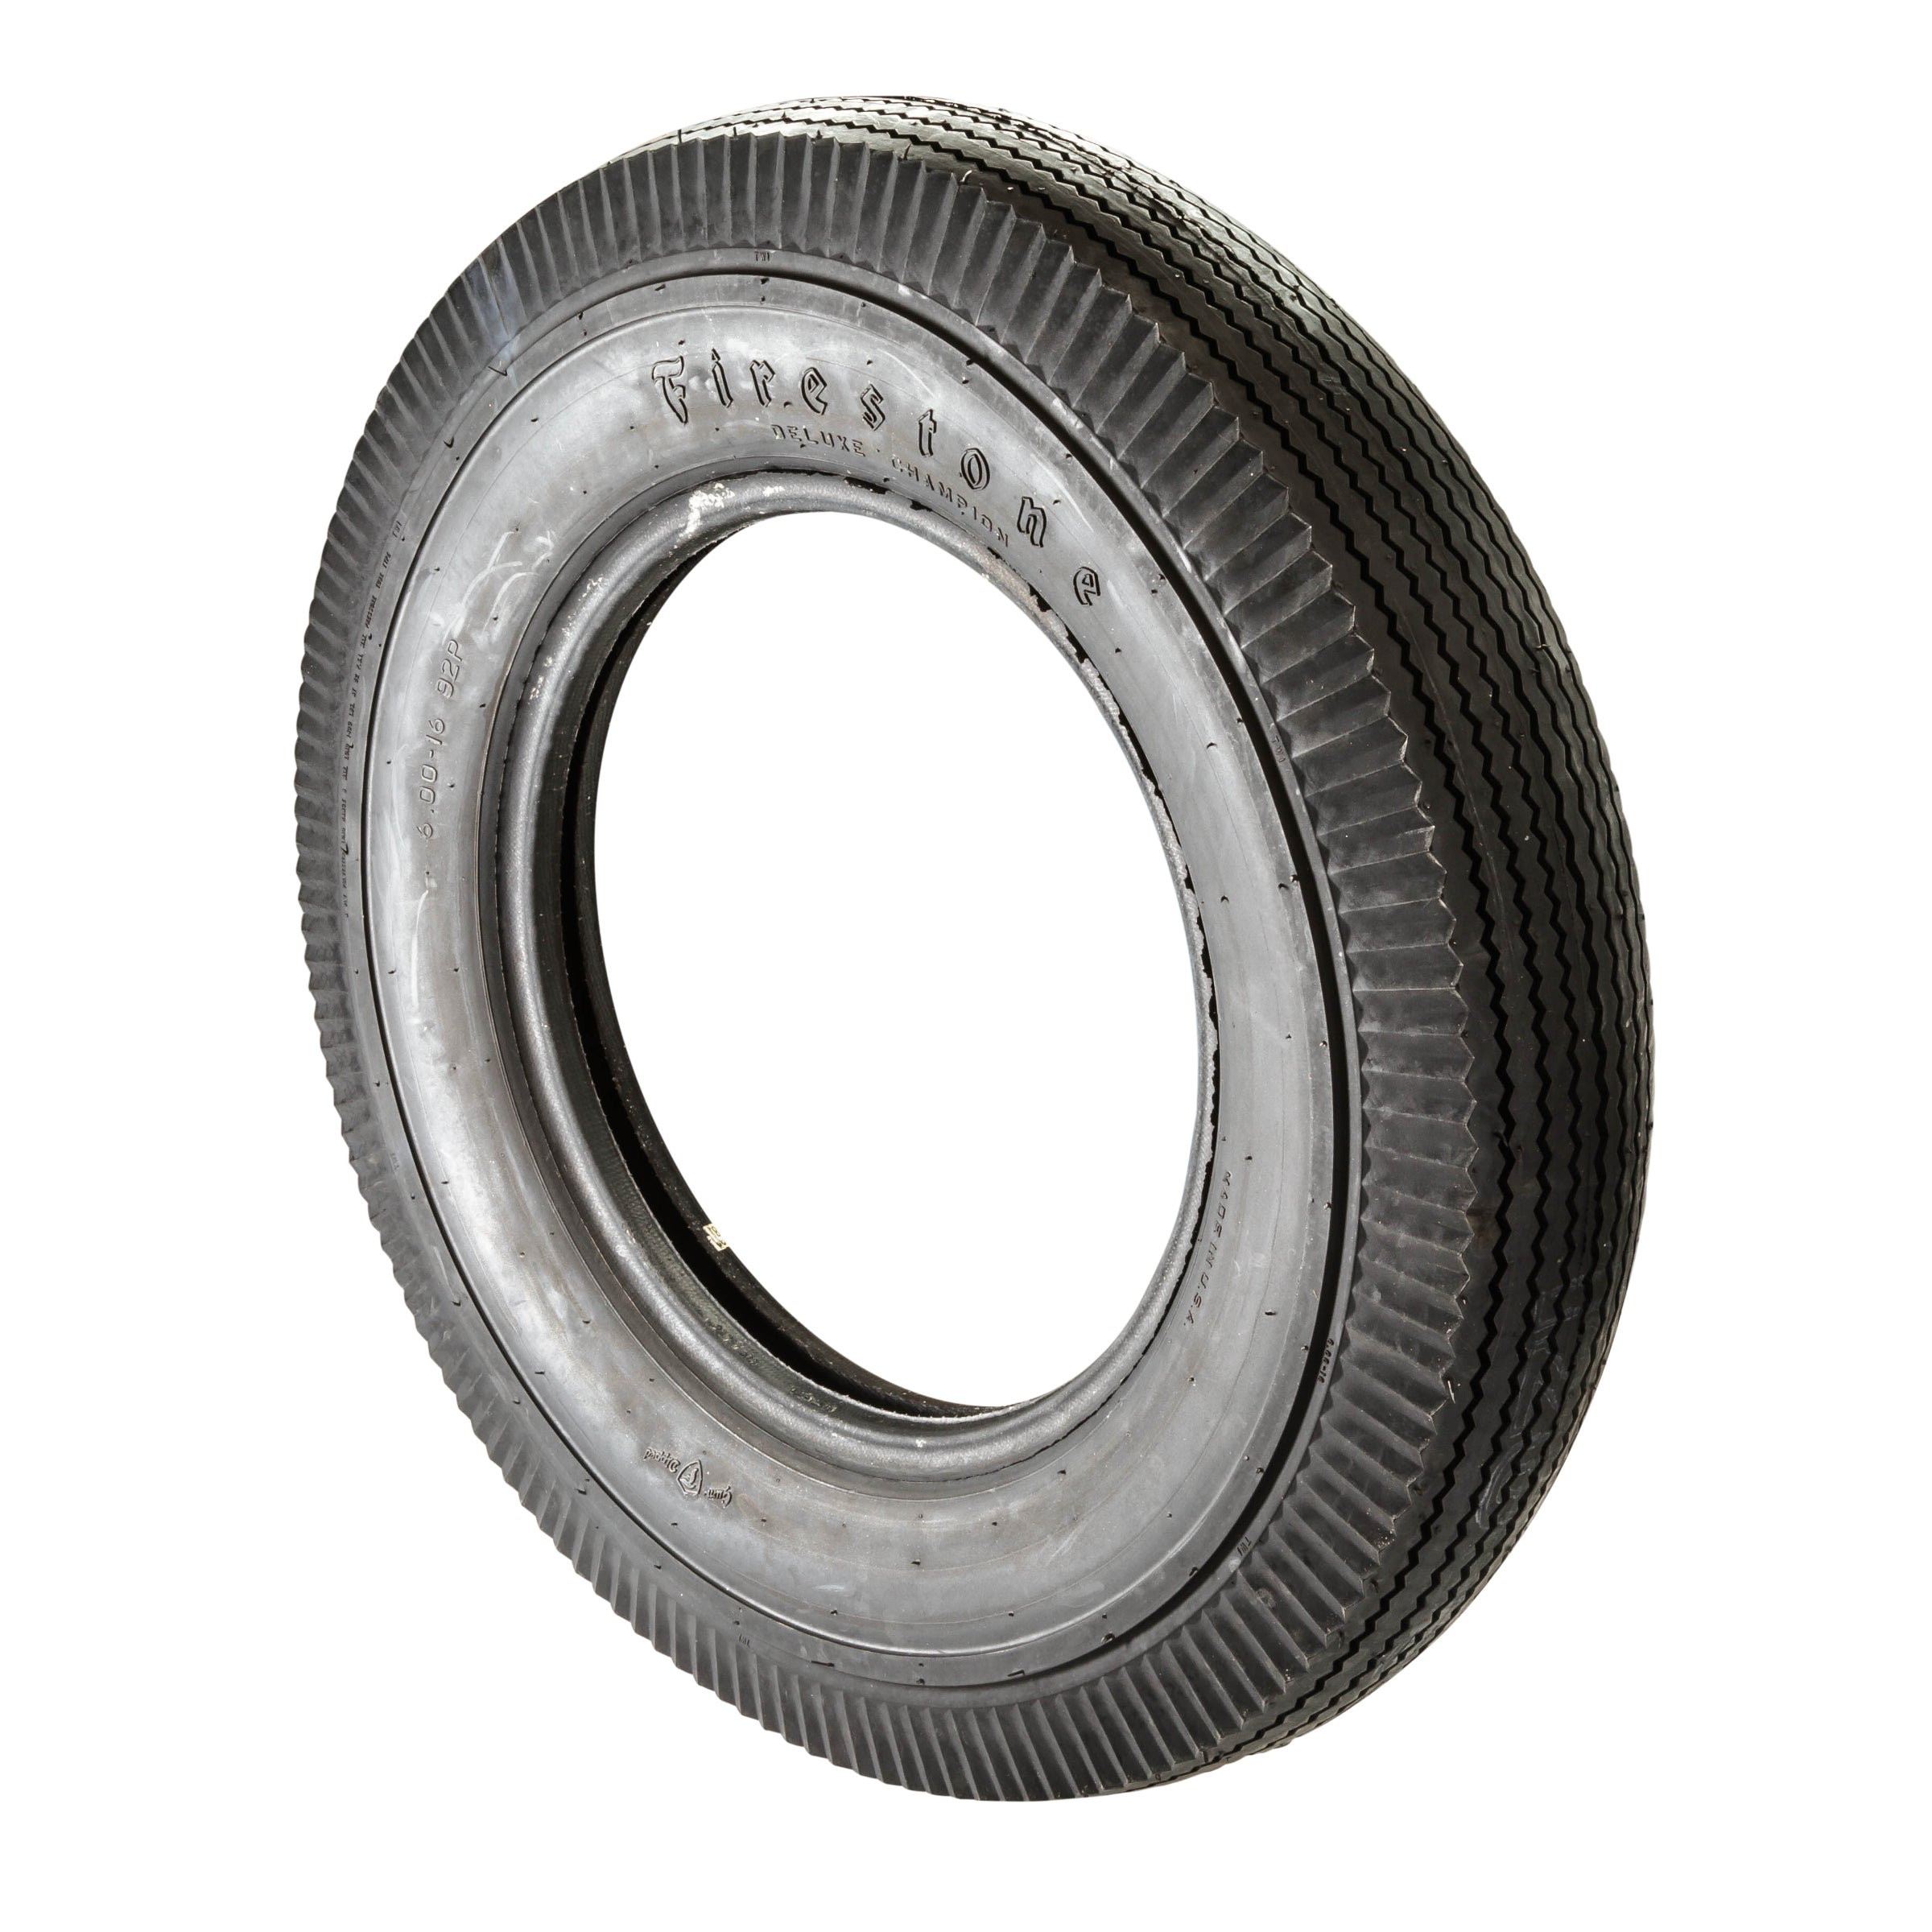 Firestone Tire 16